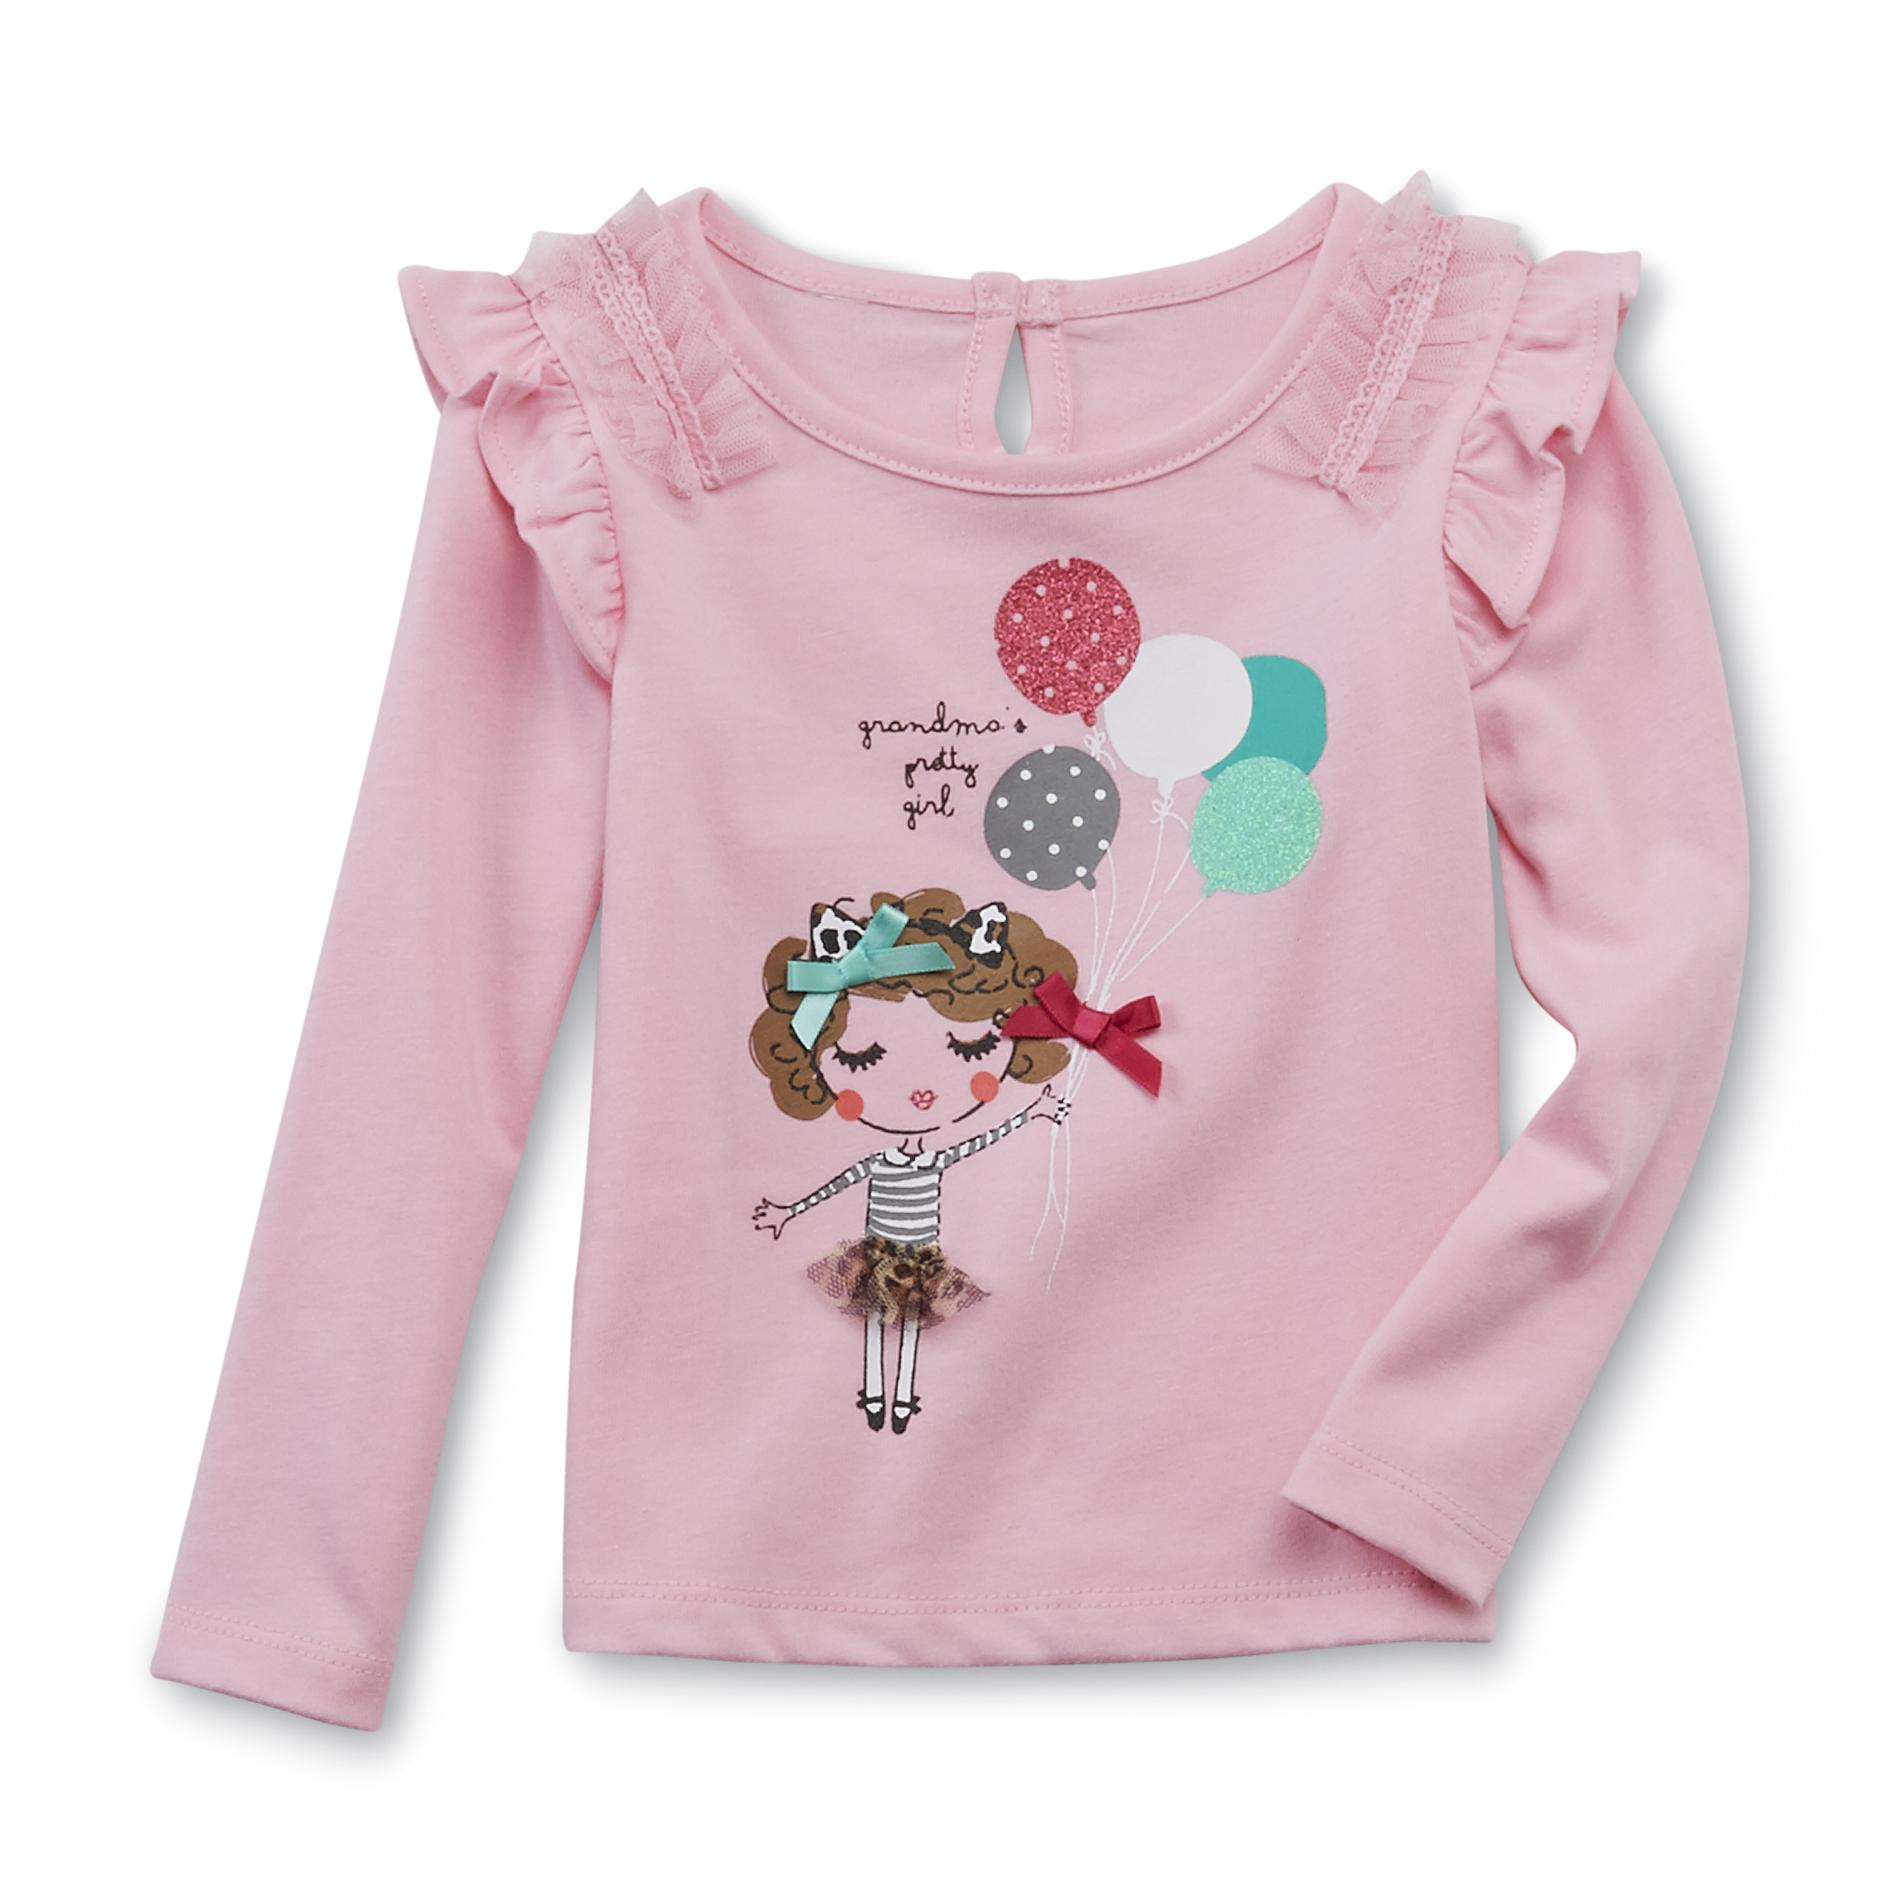 WonderKids Infant & Toddler Girl's Embellished Top - Grandma's Pretty Girl